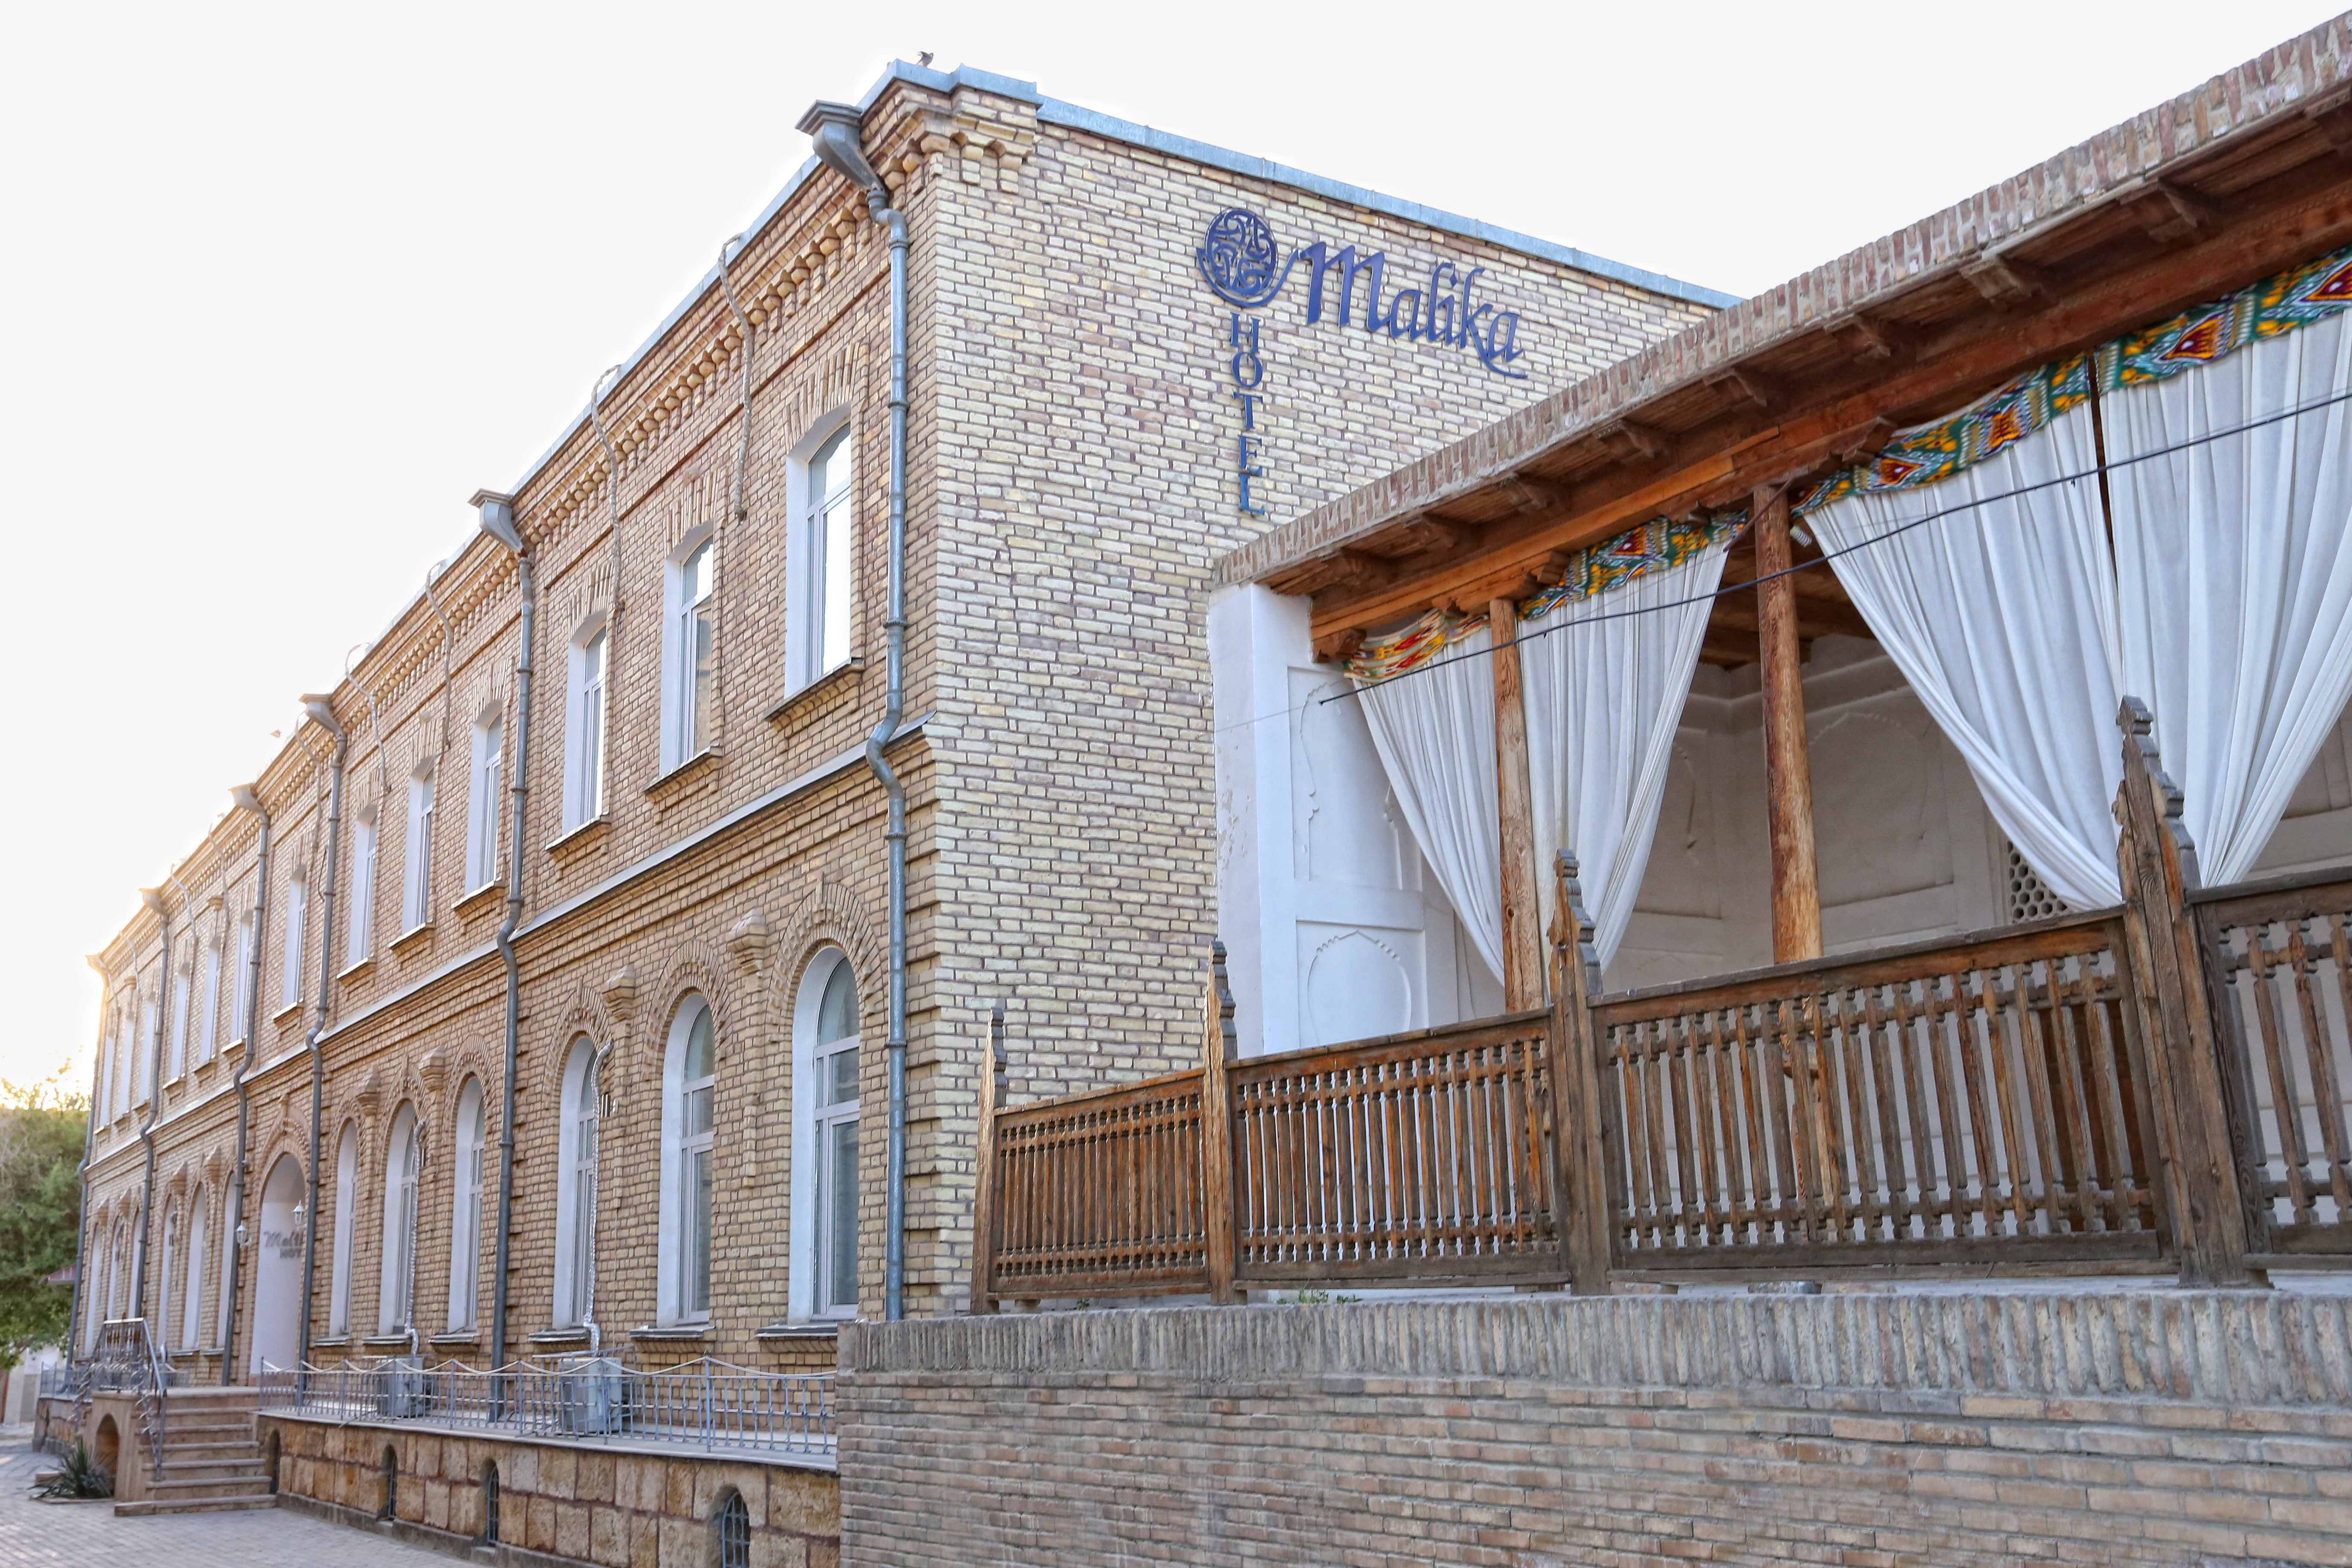 Malika Bukhara Hotel